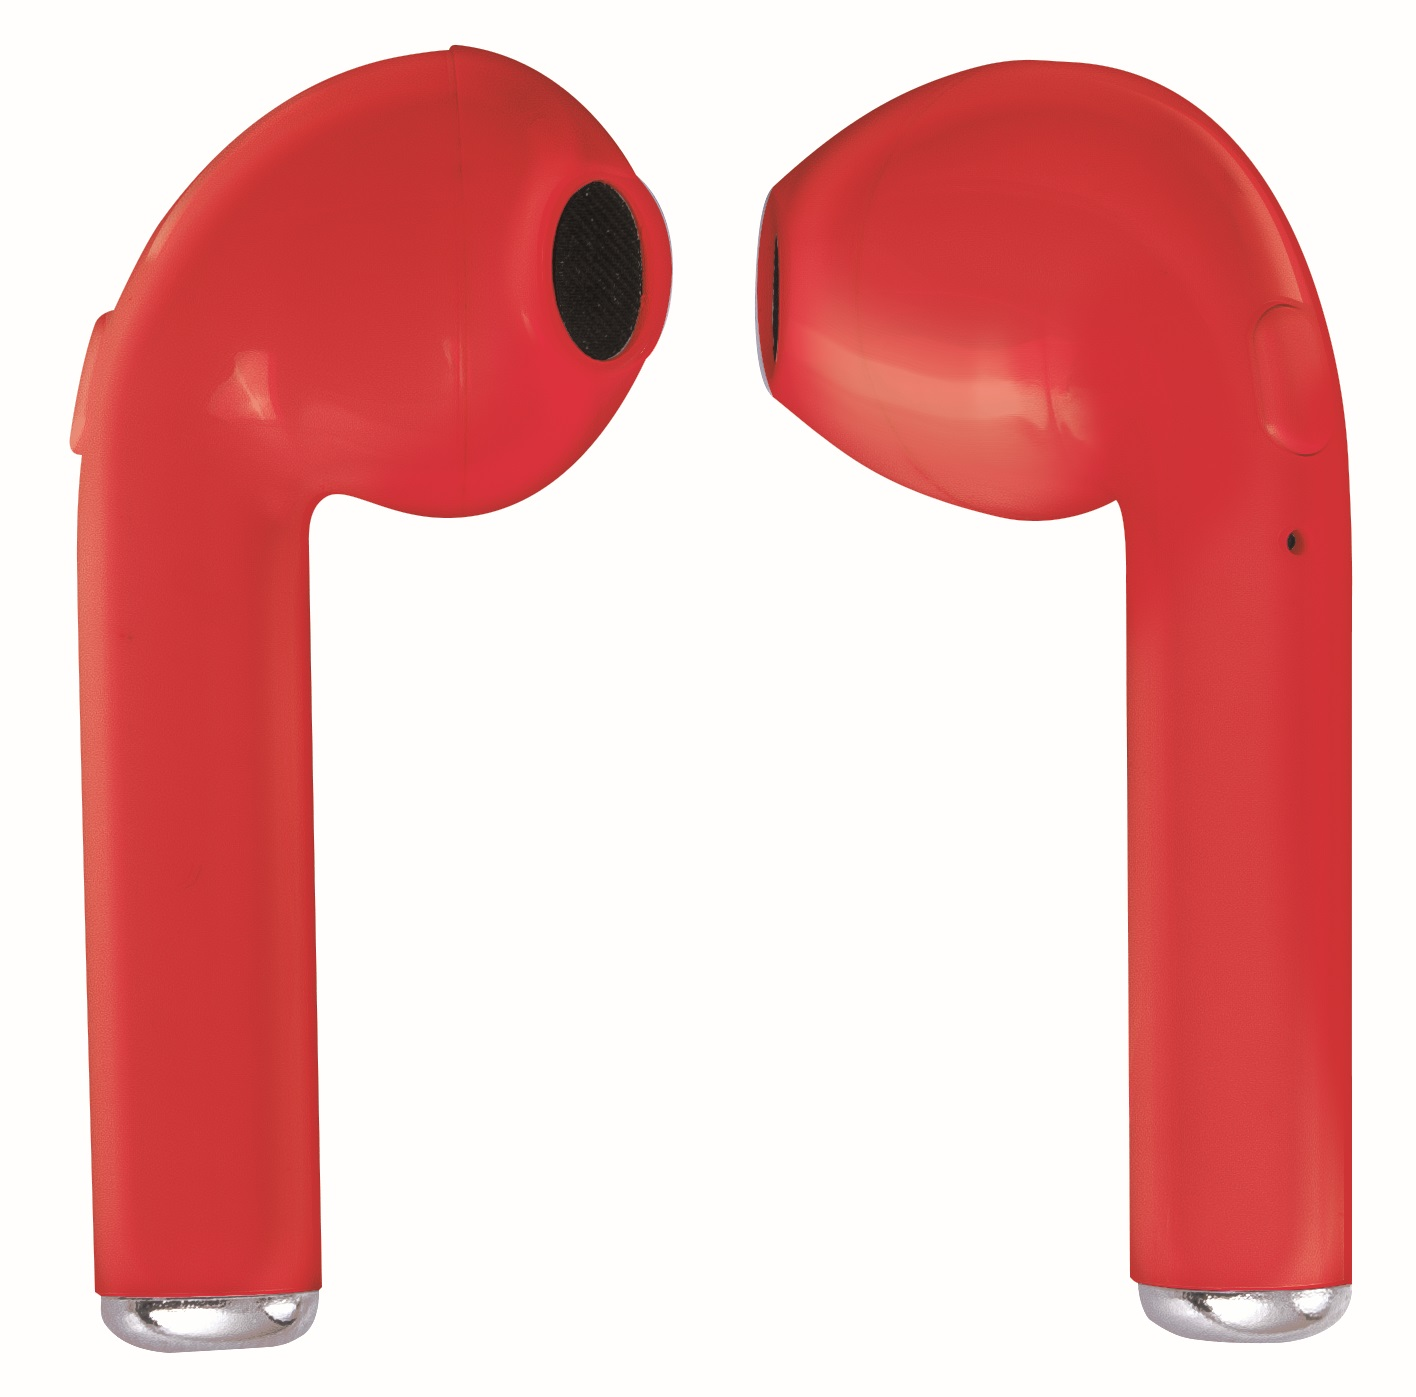 Earphones HMP 1220 rot, rot Bluetooth Wireless In-ear TREVI Air